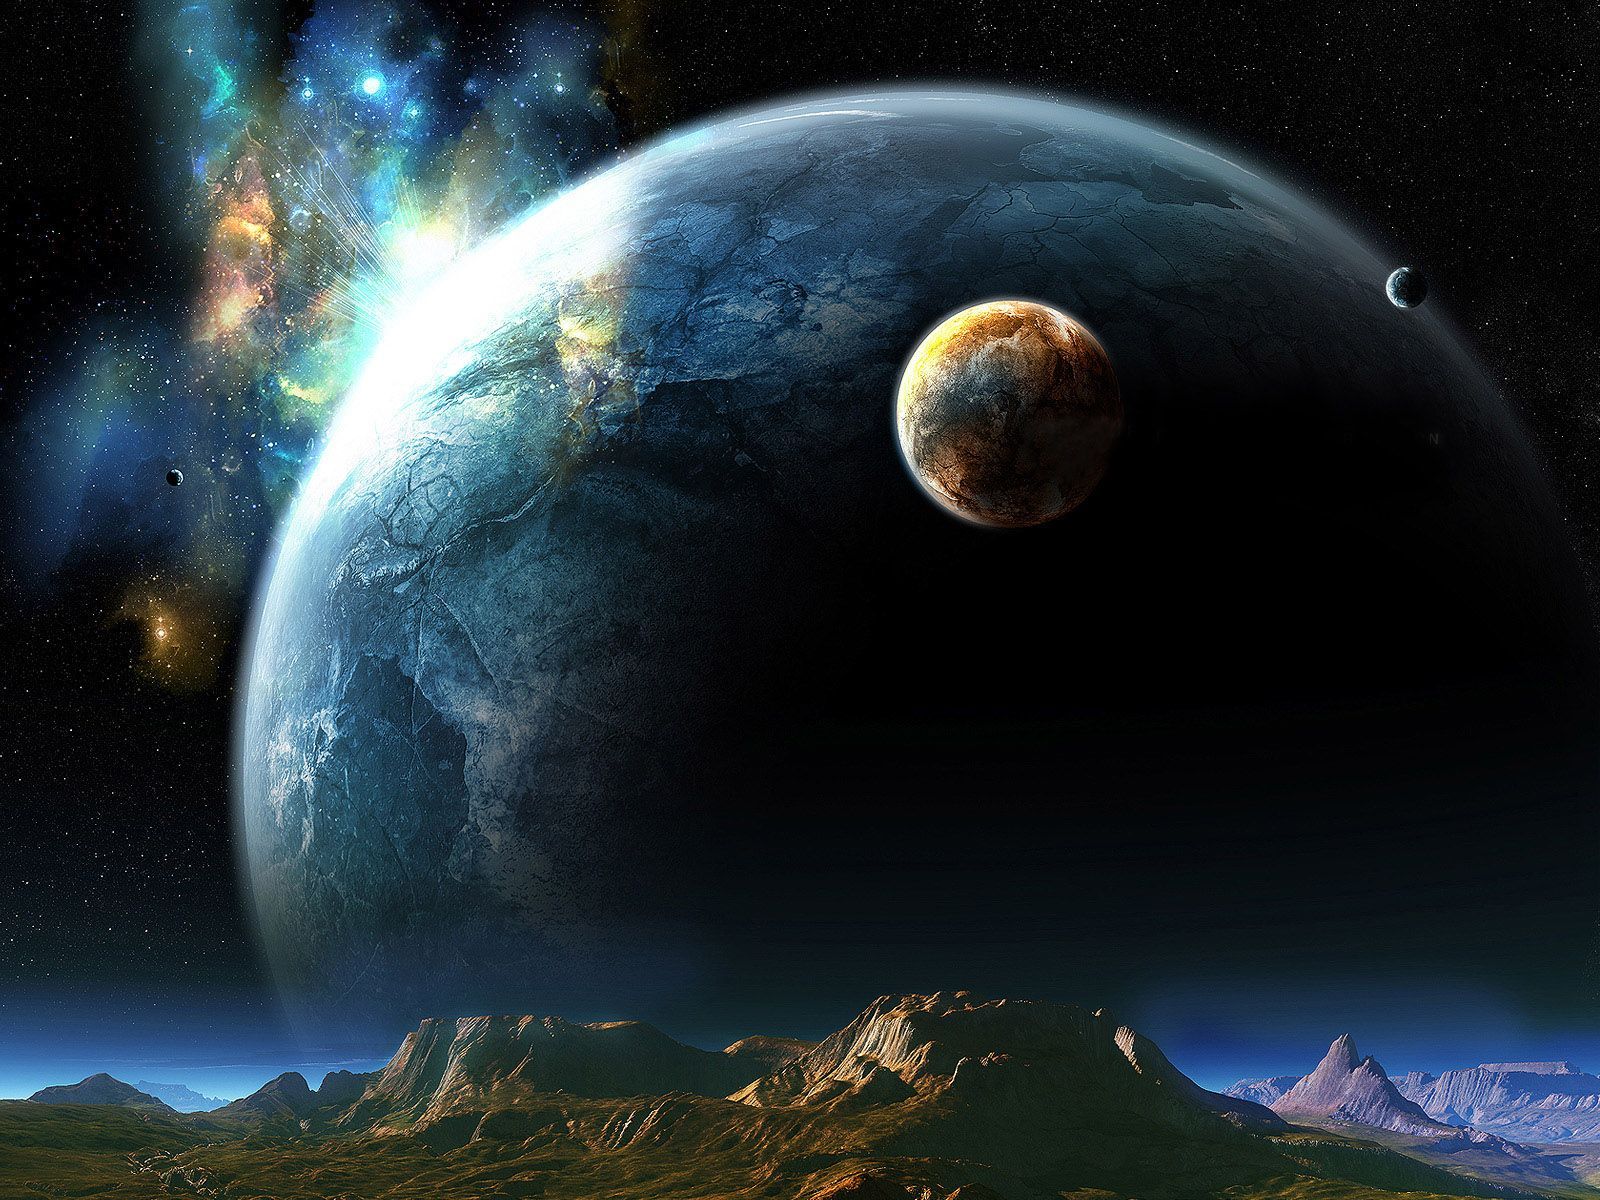 Free HD 1080p Desktop Wallpaper, Universe Wallpaper. Planets wallpaper, Planet picture, Space photography